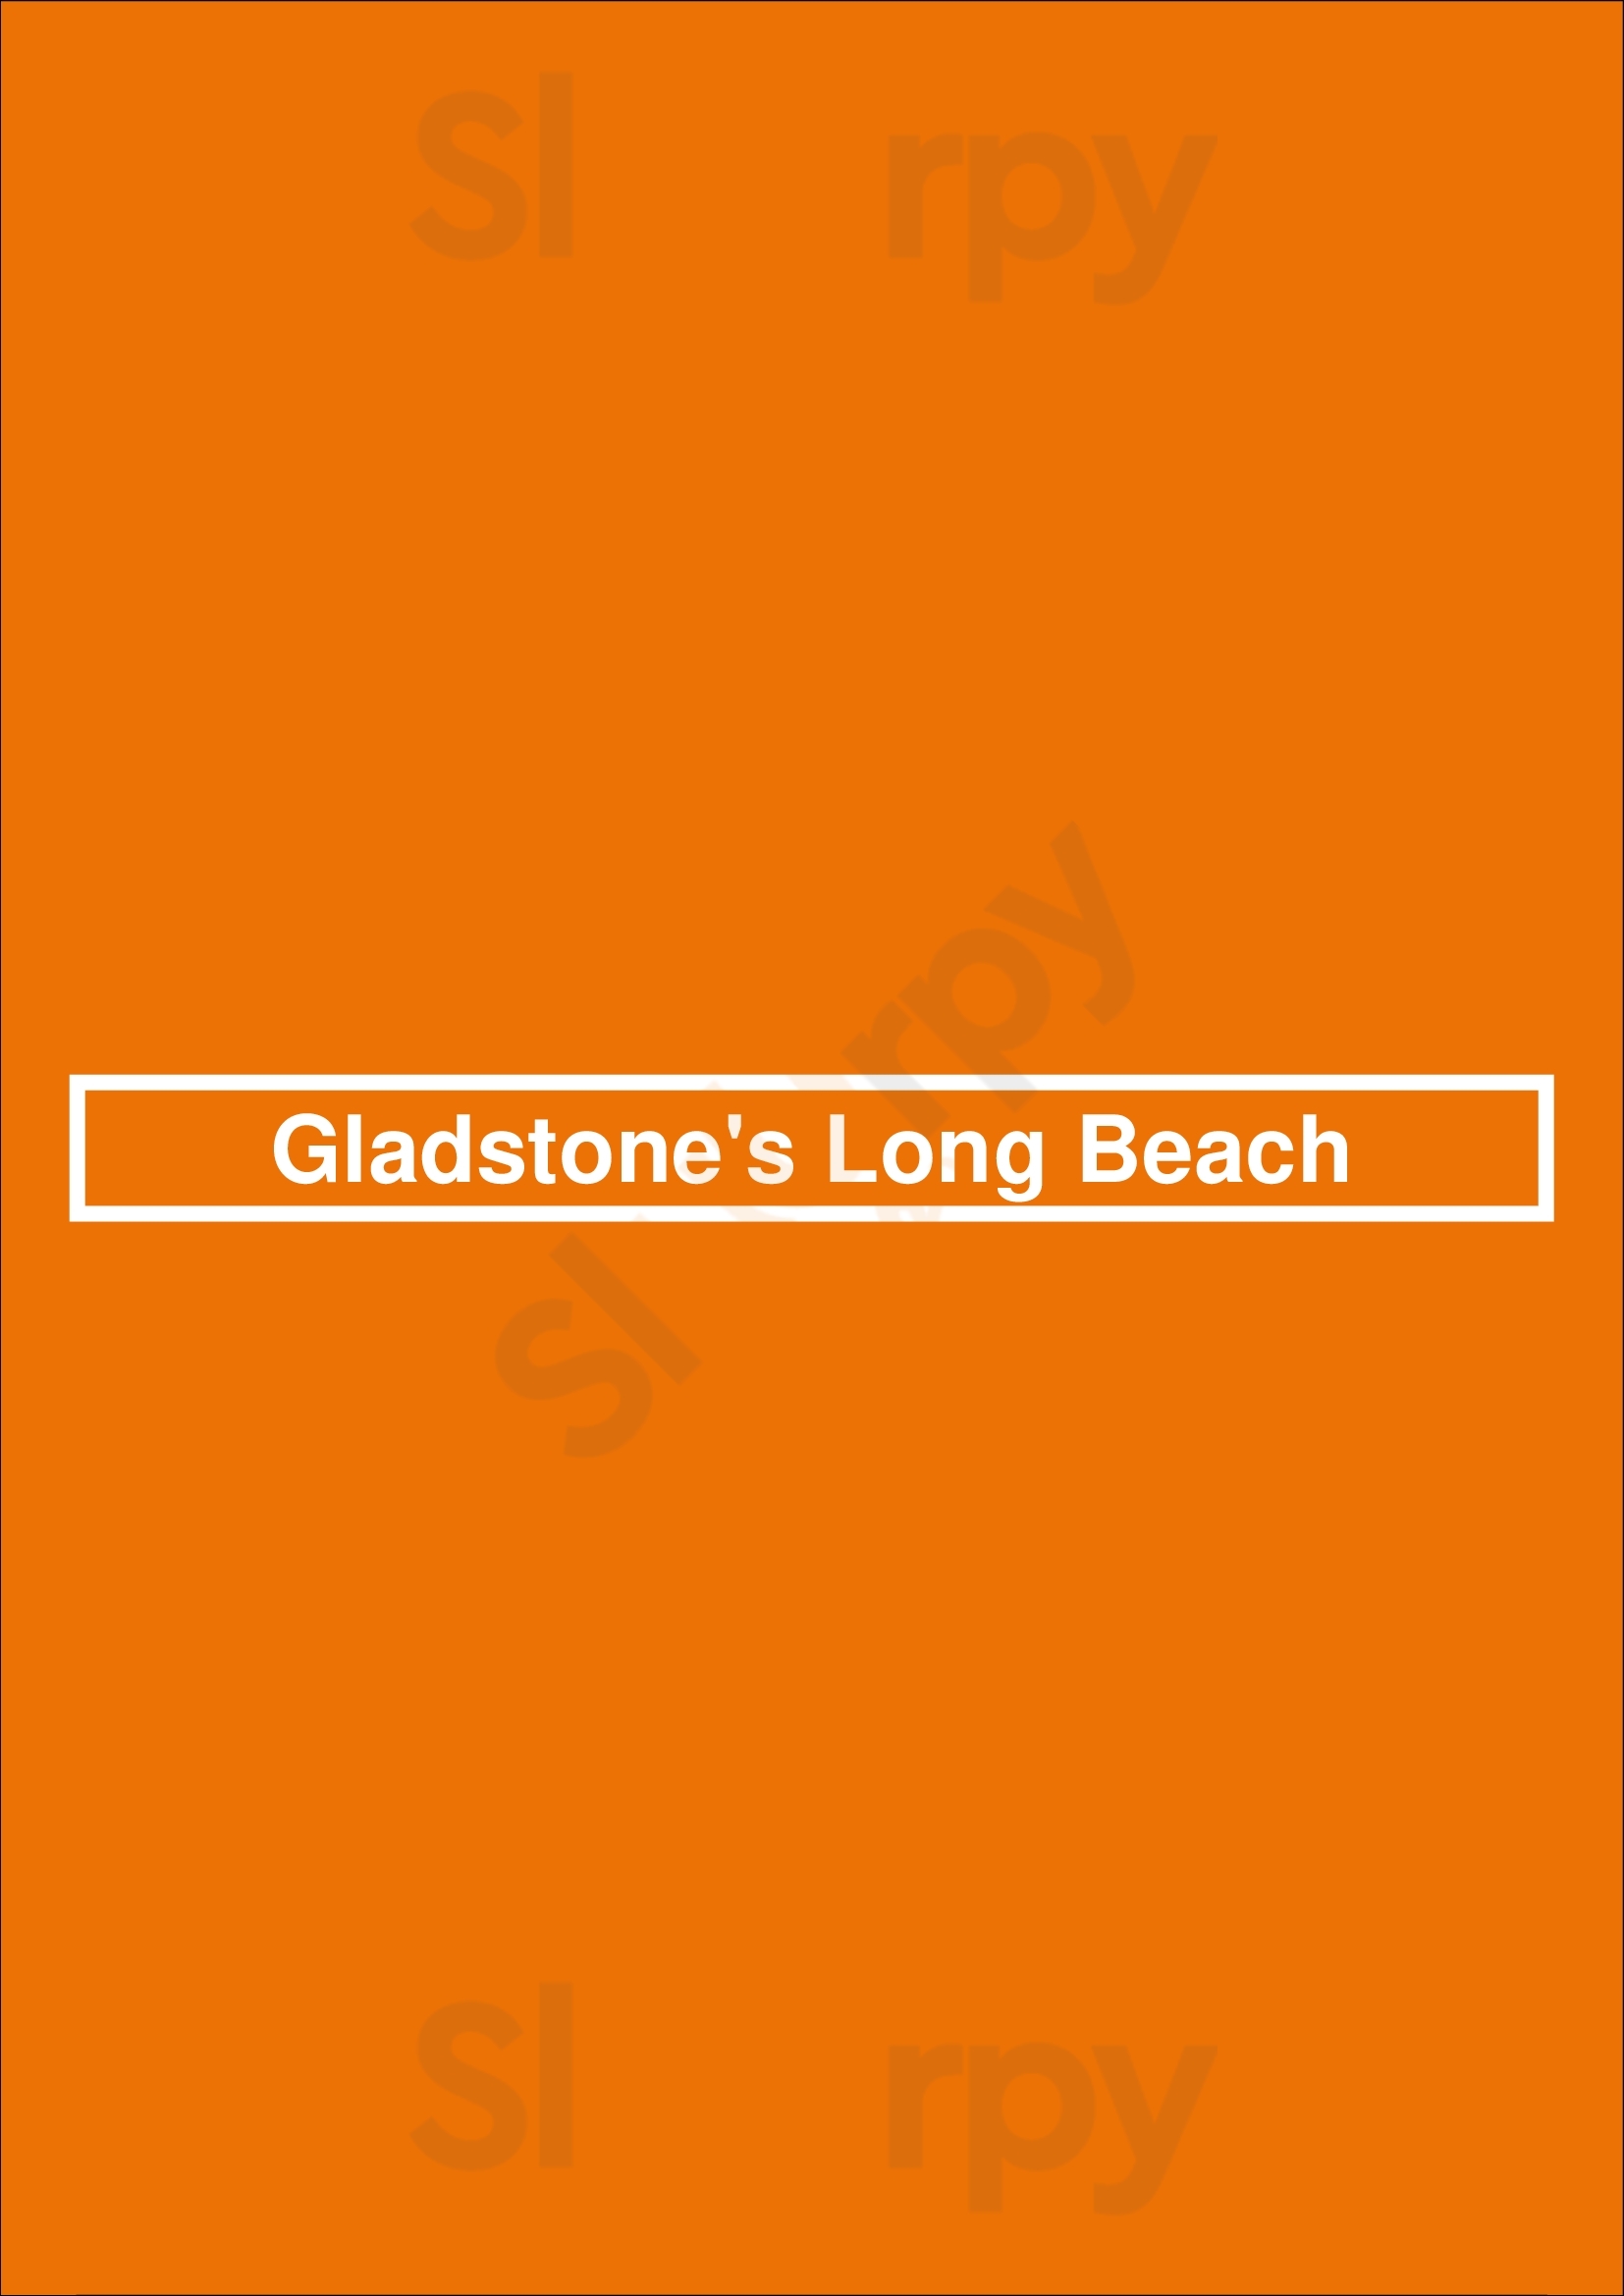 Gladstone's Long Beach Long Beach Menu - 1